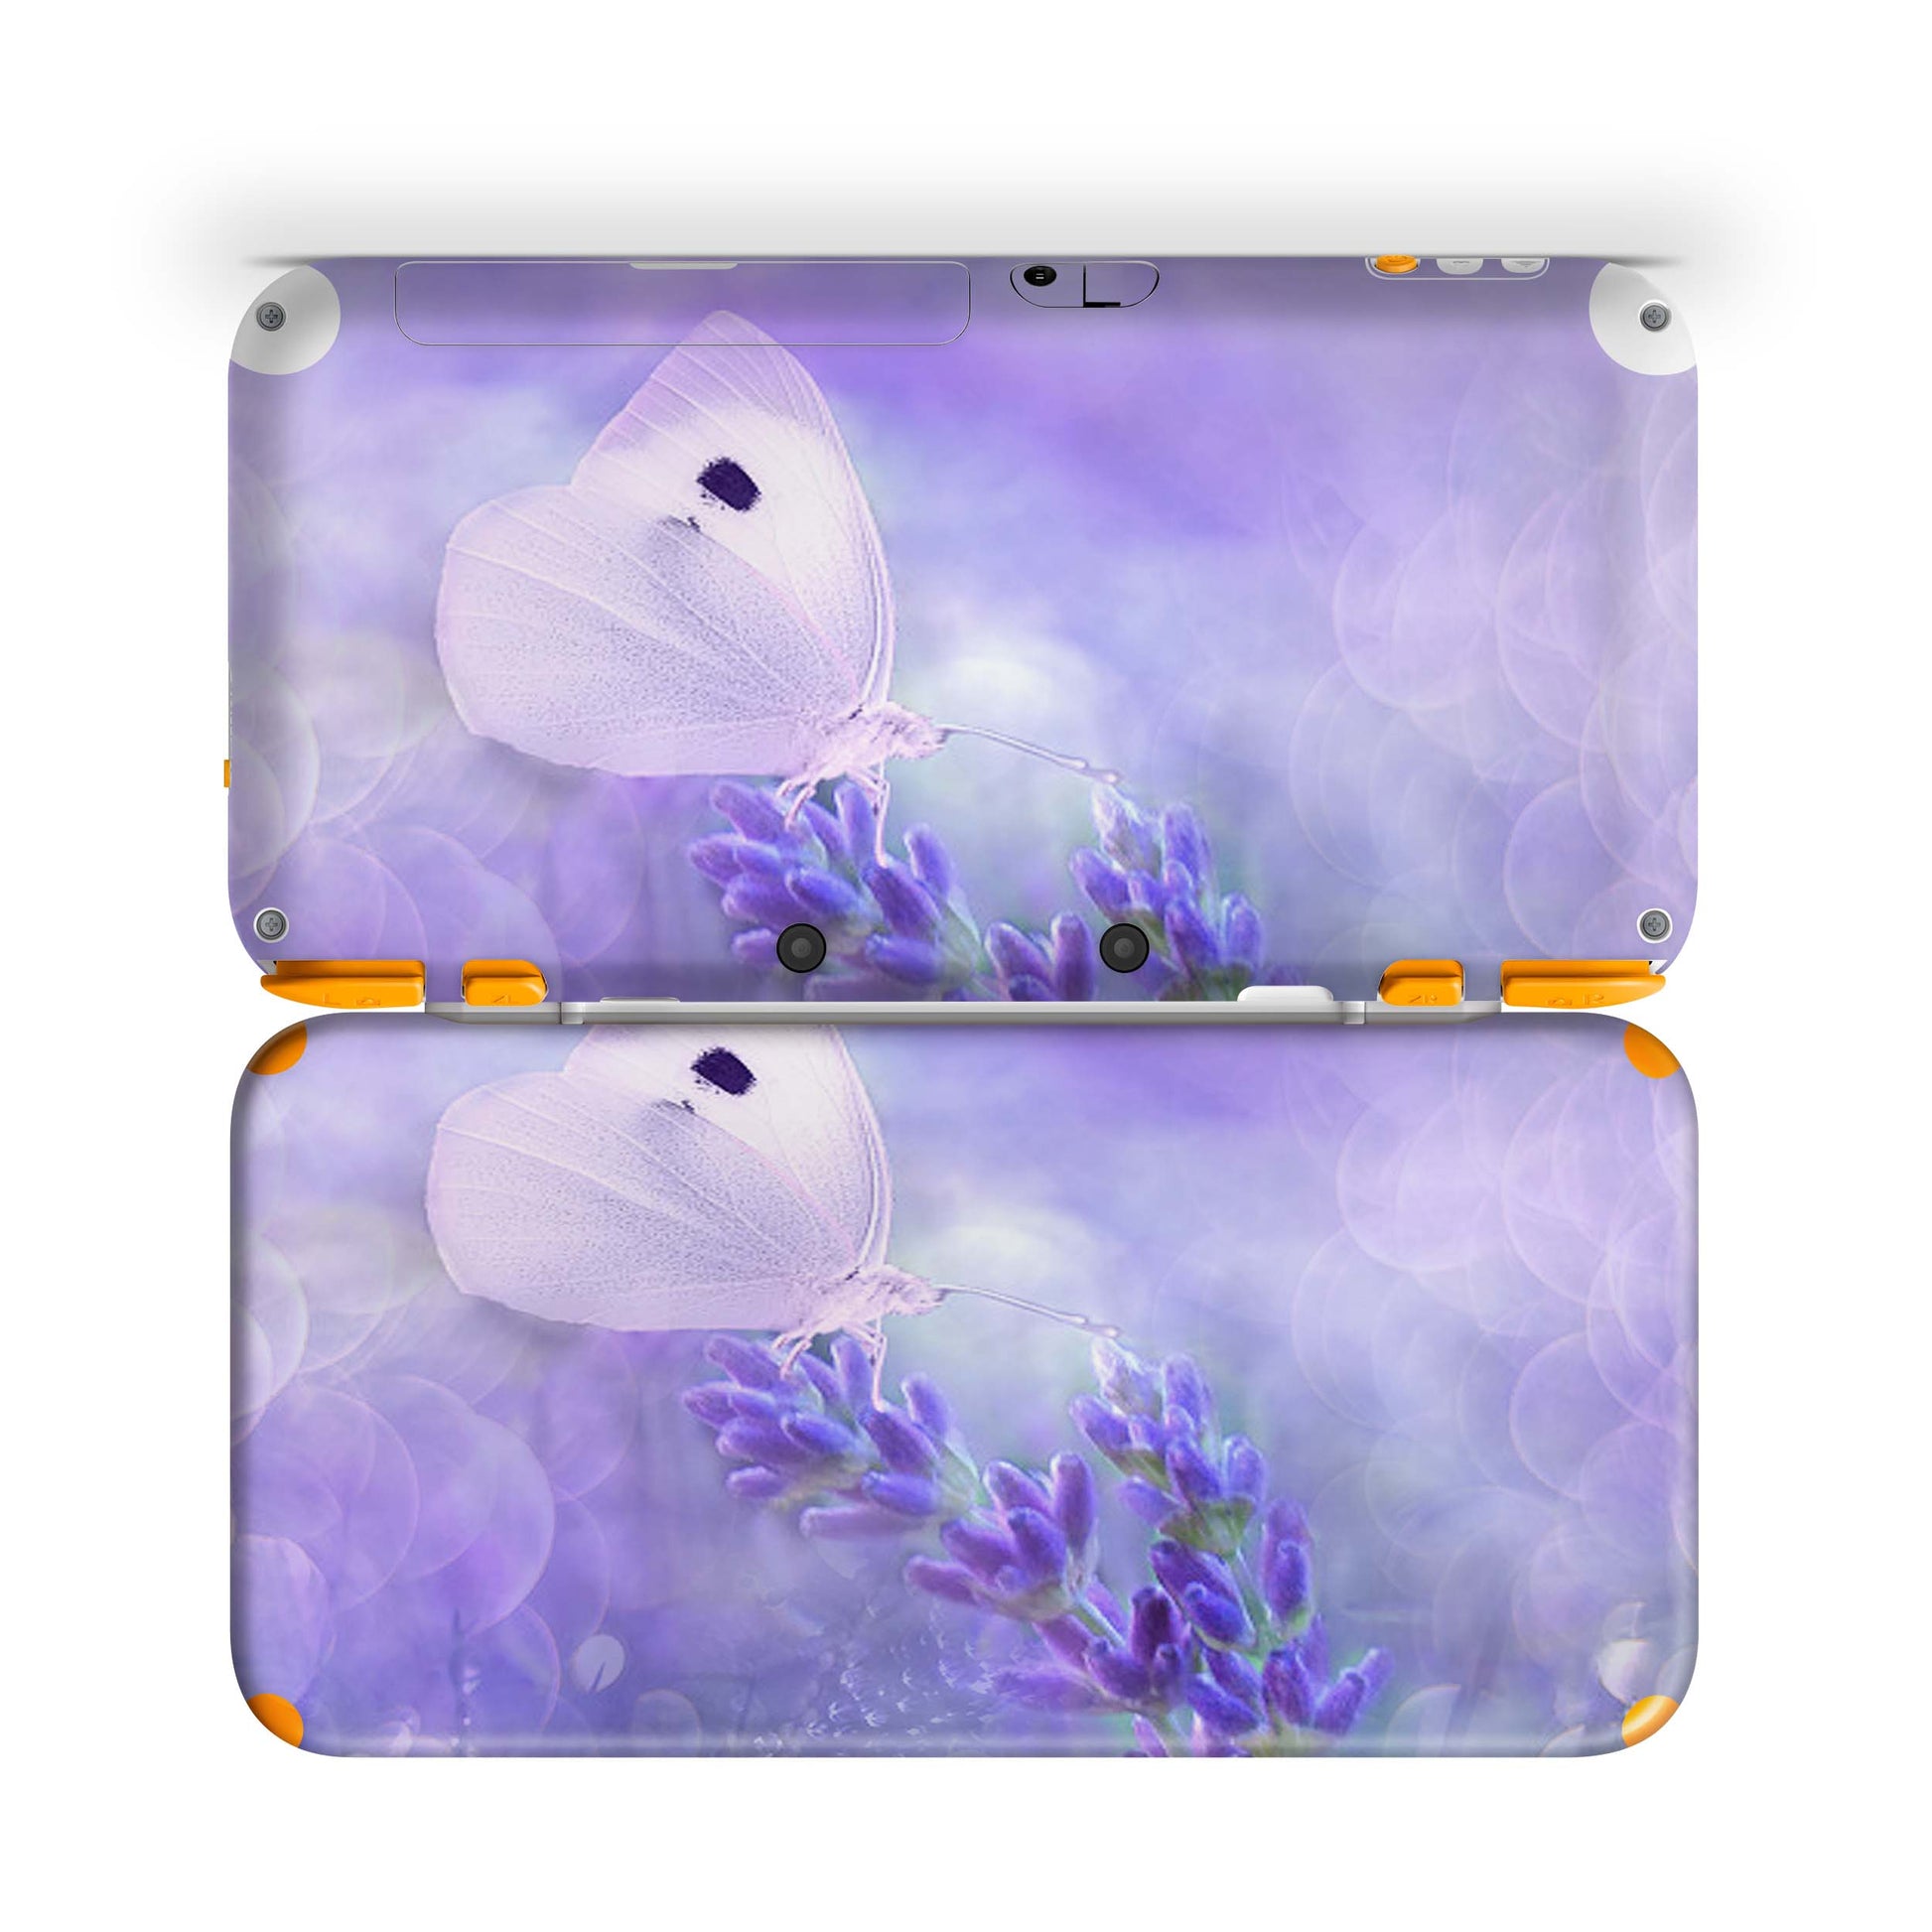 New Nintendo 2DS XL Skin Design Schutzfolie Aufkleber Folie Lavendel Butterfly Aufkleber Skins4u   